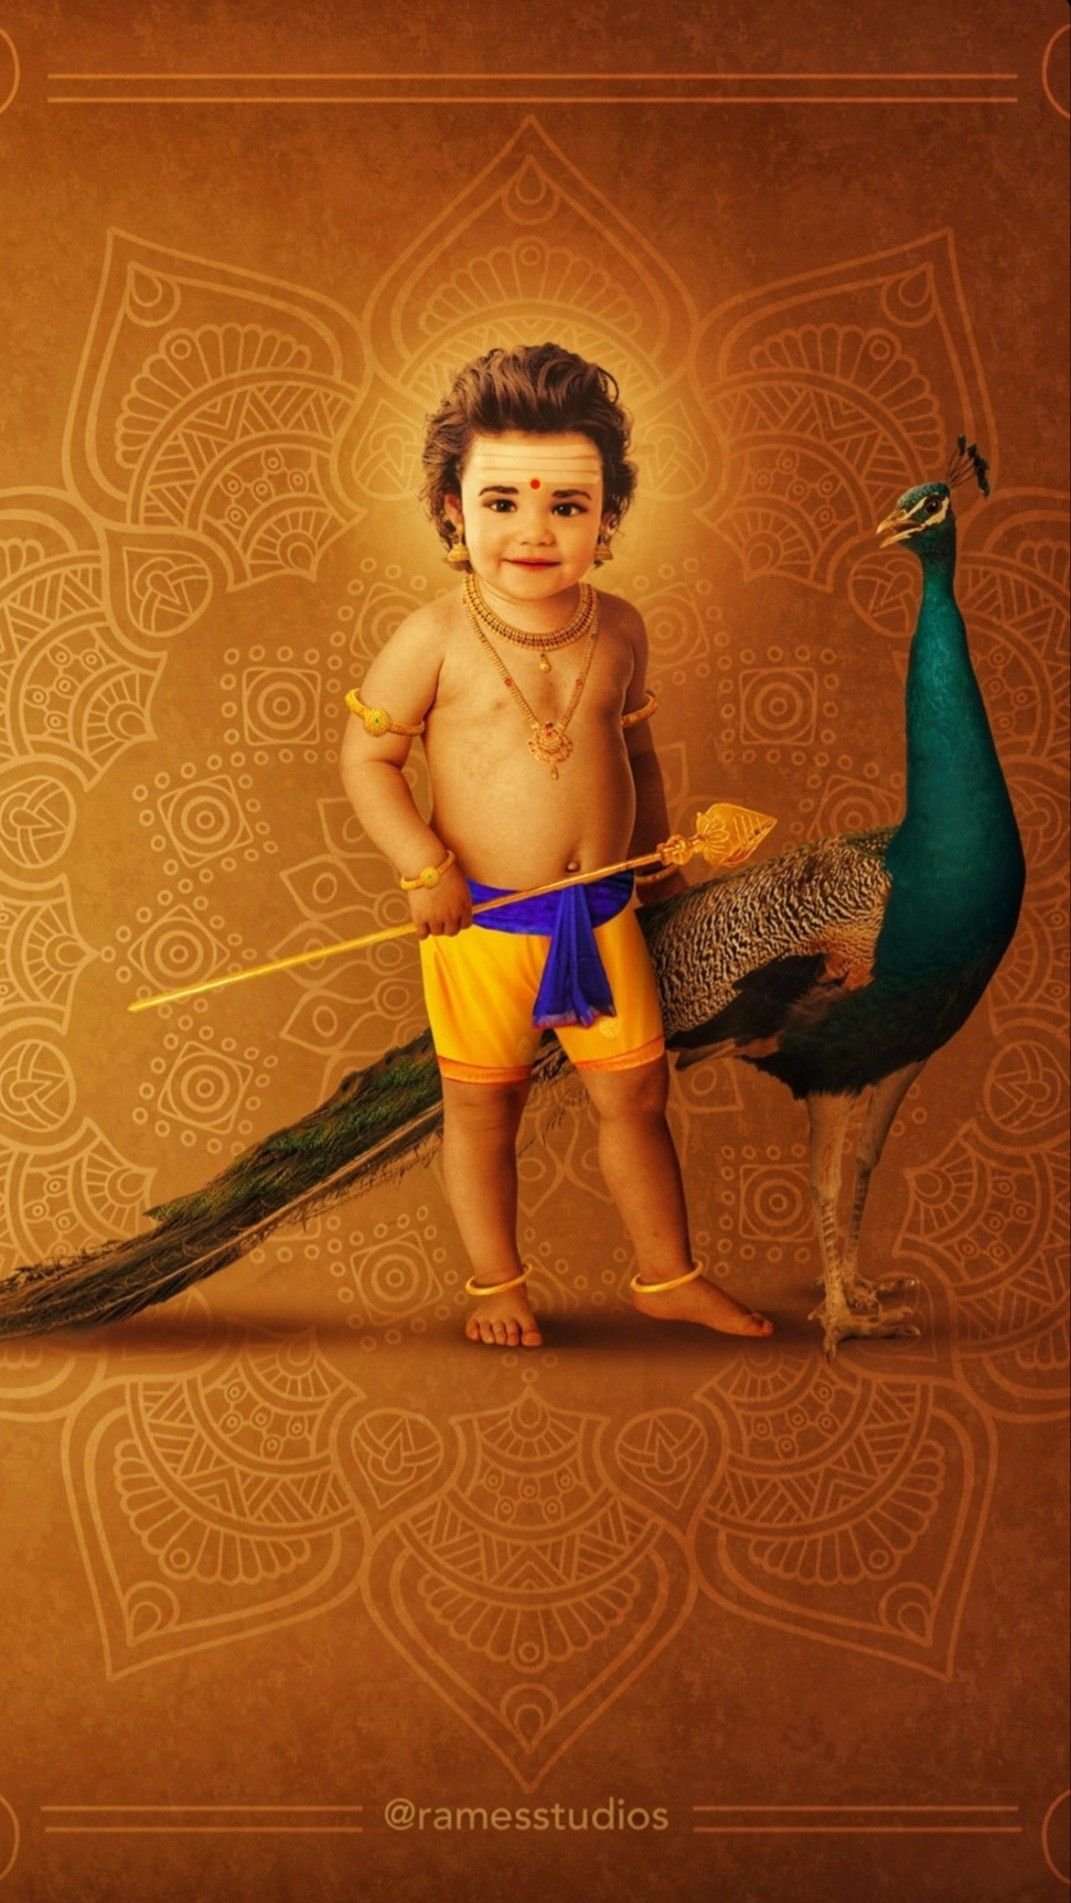 Best 35+ Lord Ayyappa Images | Ayyappa Photos | Hindu Gallery